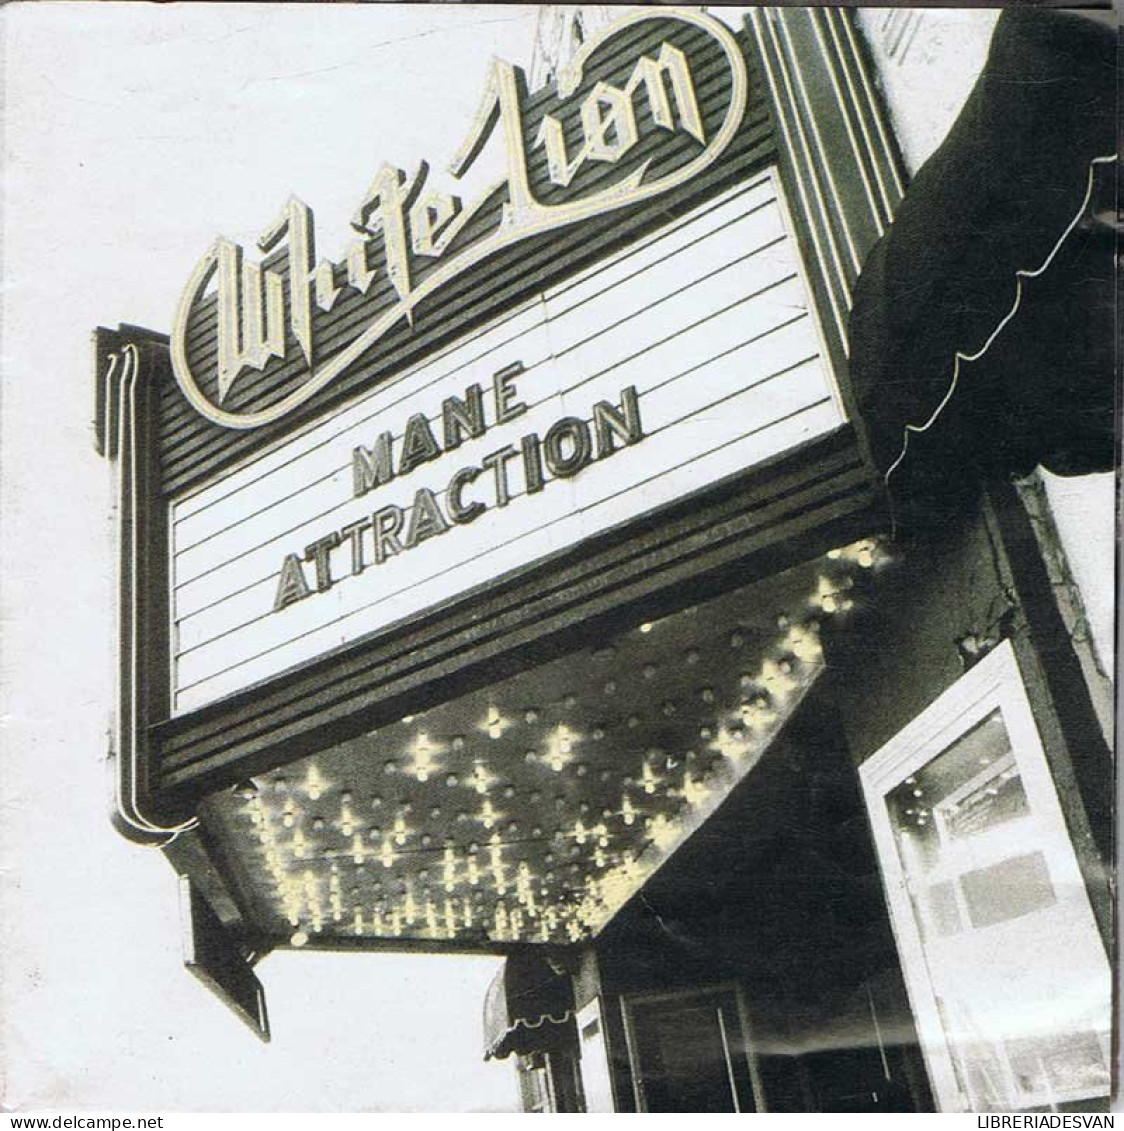 White Lion - Mane Attracton. CD - Rock